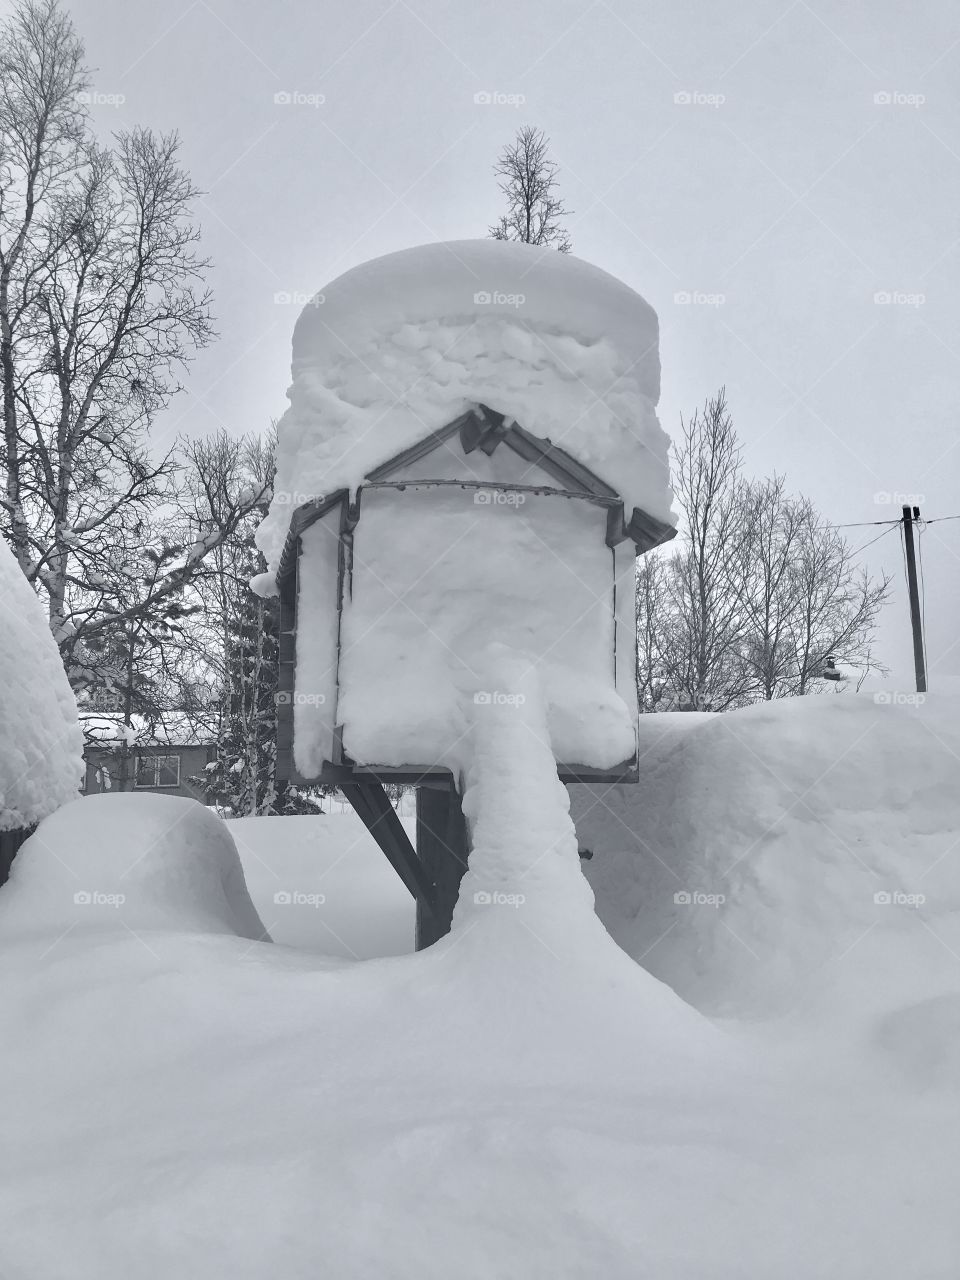 Sweden kiruna, winter 2018, snow, cold